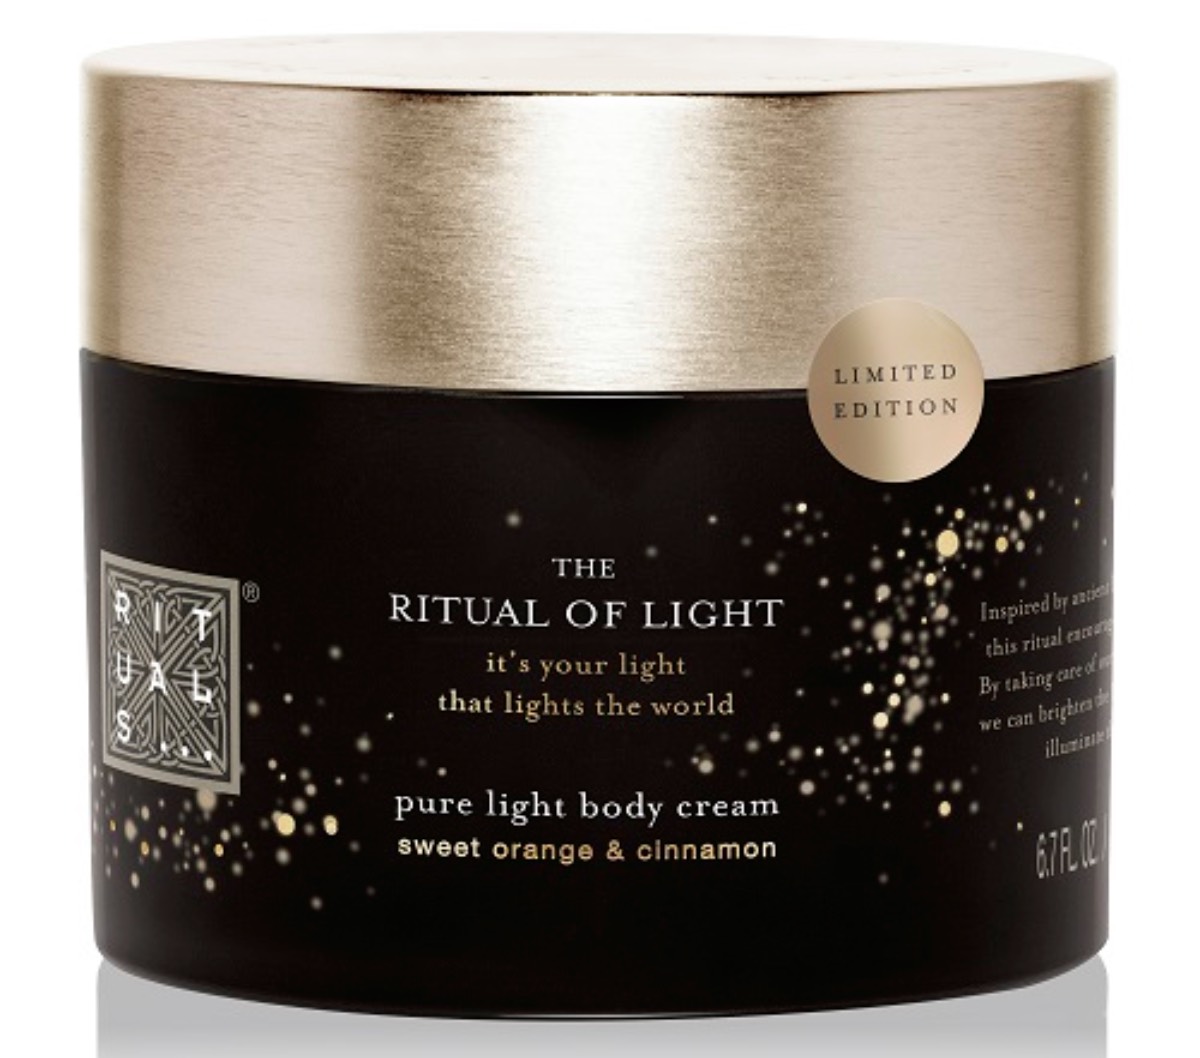 The Ritual of Light body cream